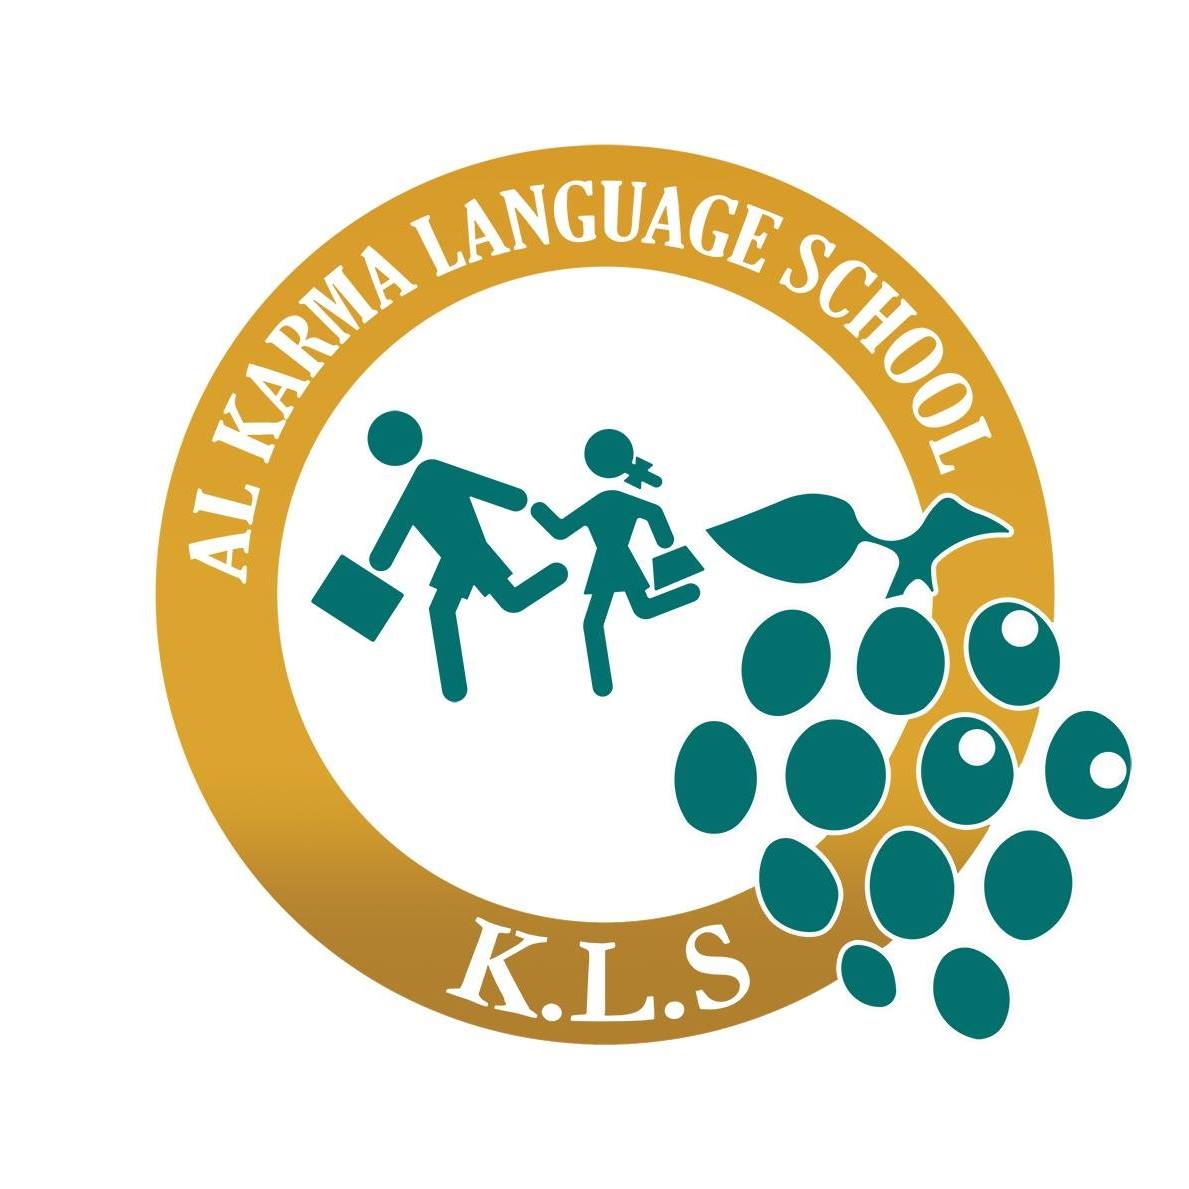 Al Karma Language School